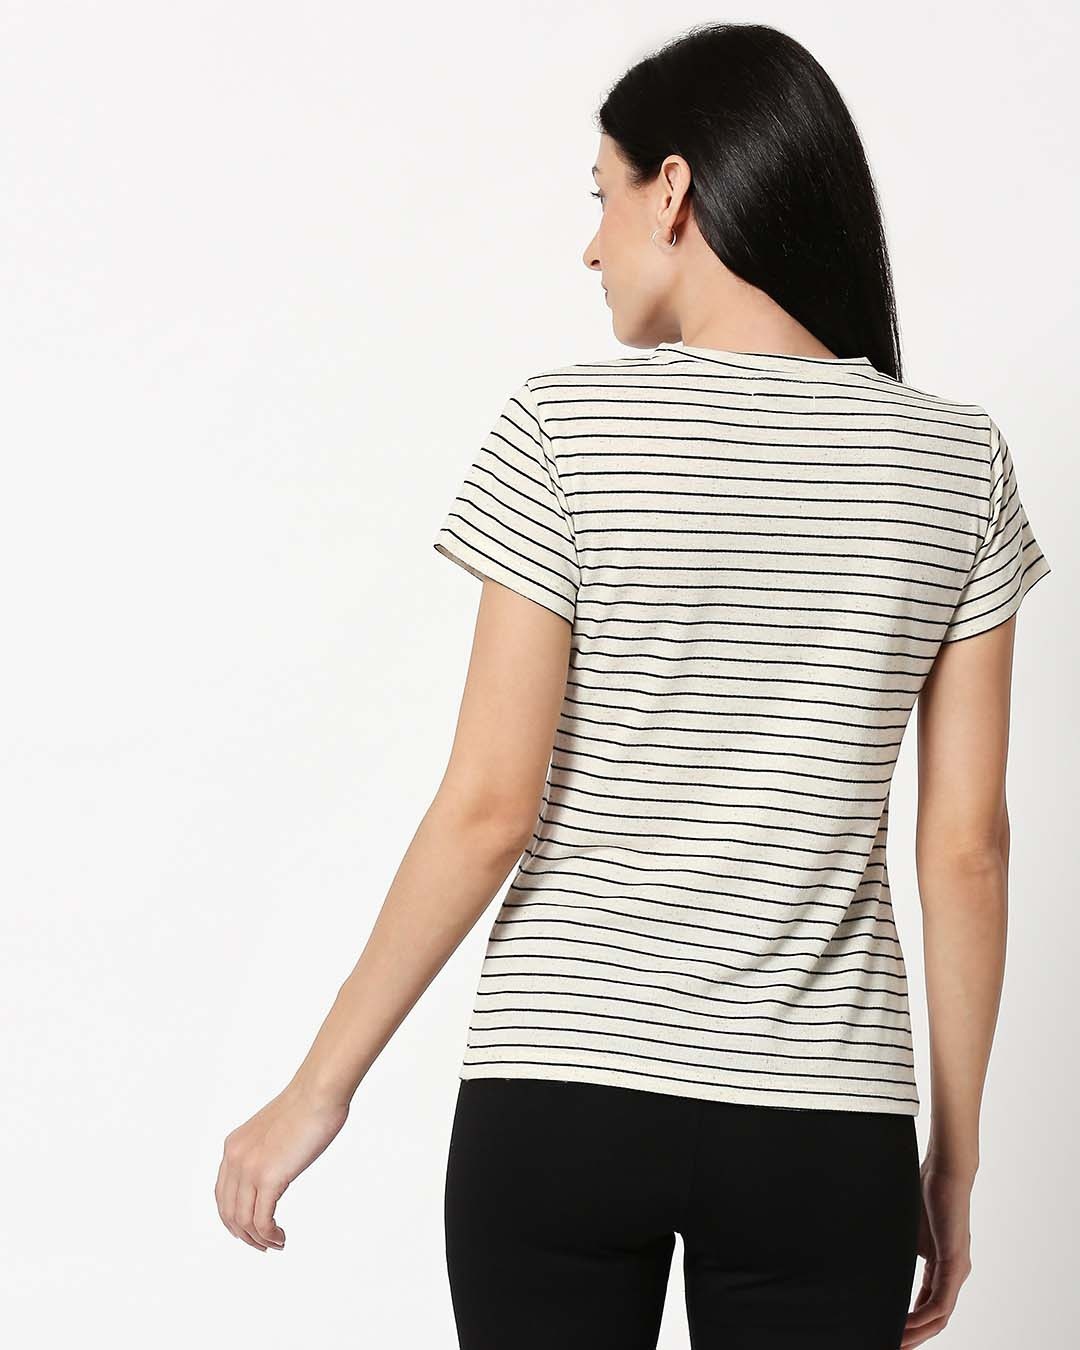 Shop Women's Half Sleeves T-Shirt